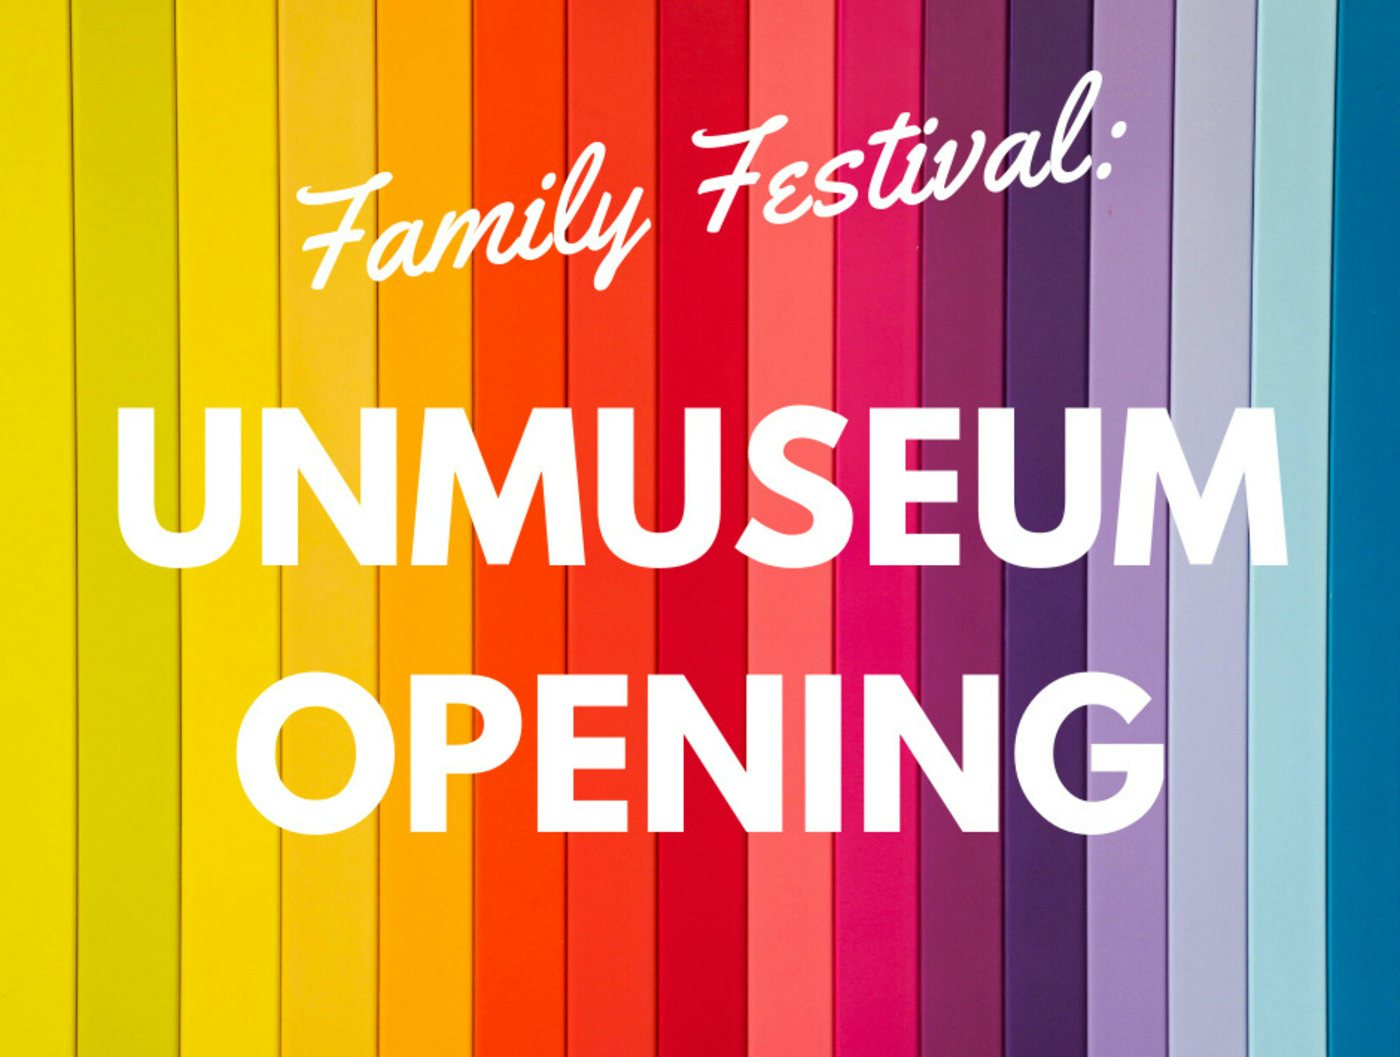 Family Festival: UnMuseum Opening!